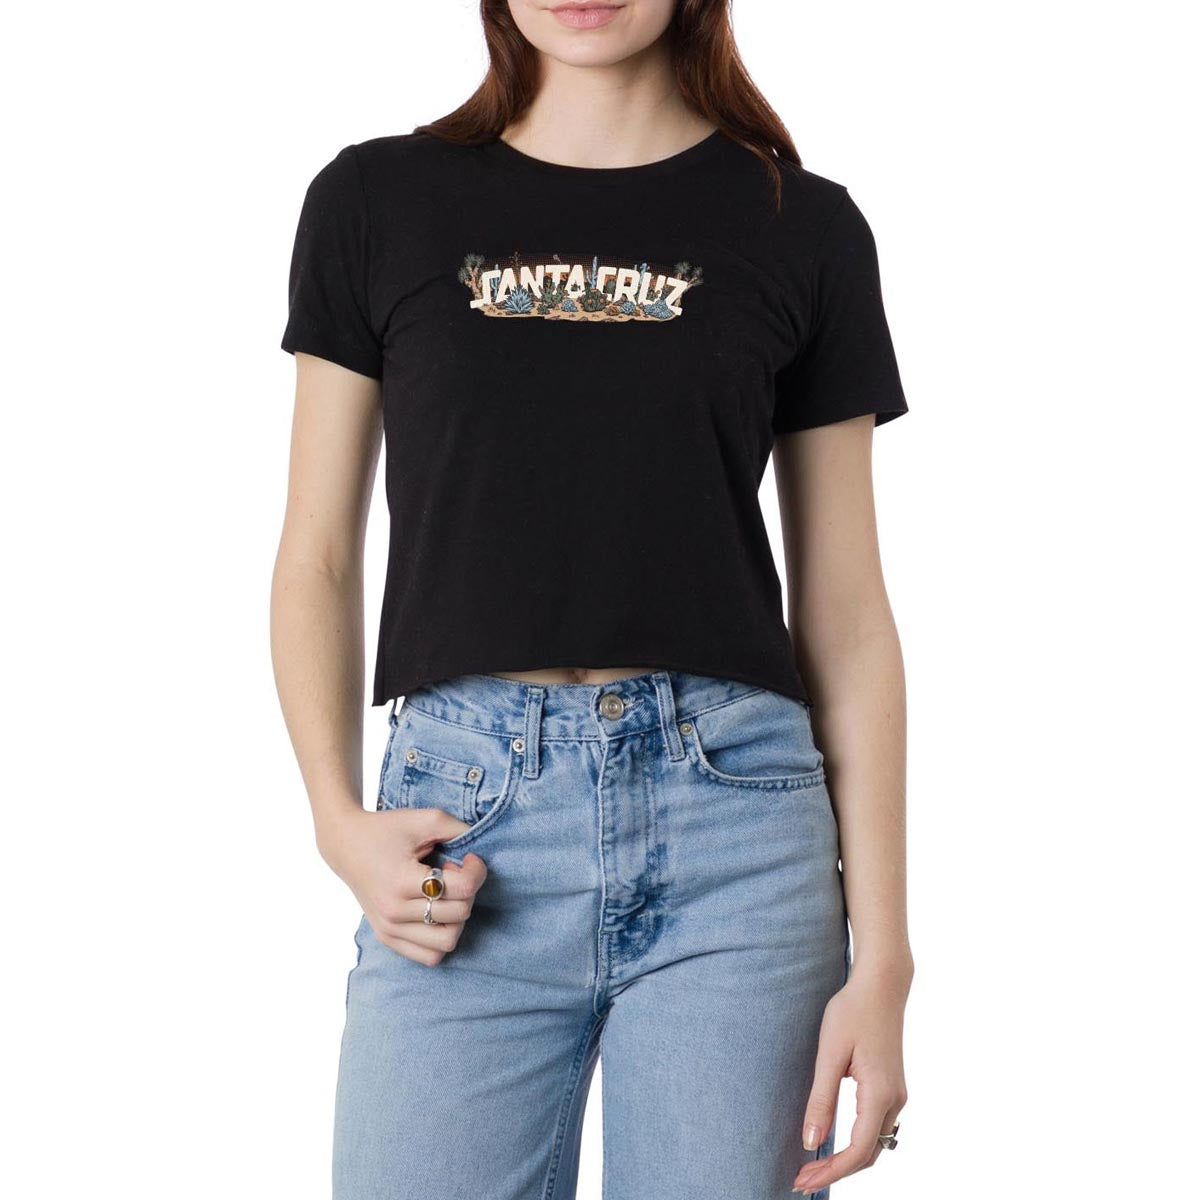 Santa Cruz Womens Desert Strip Crop Fitted T-Shirt - Black image 1